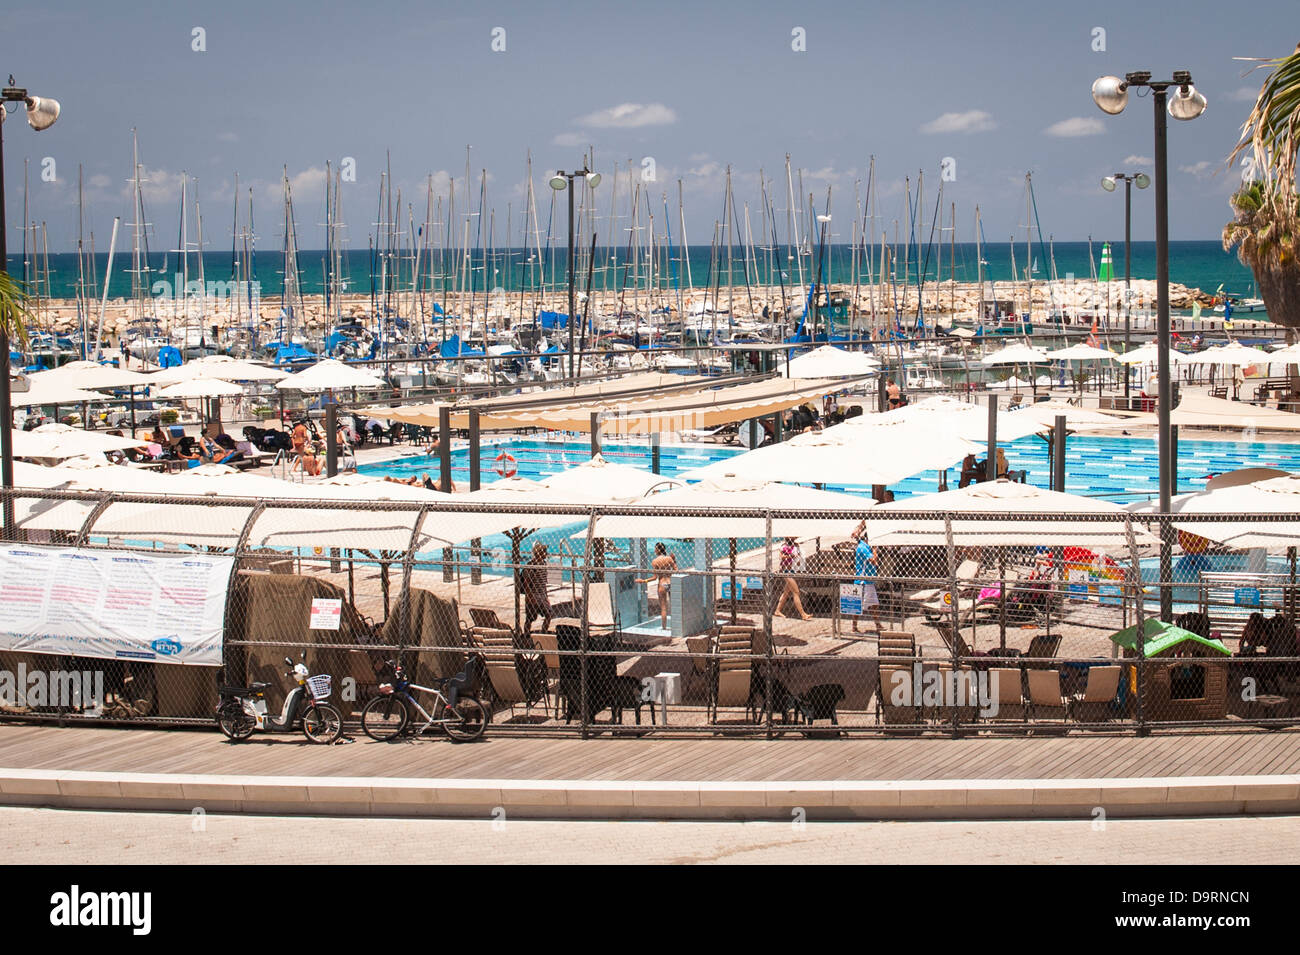 Israel Tel Aviv Gay Pride Day Gordon Beach swimming pool leisure pleasure boat port harbour marina Mediterranean Sea blue sky palm trees Stock Photo